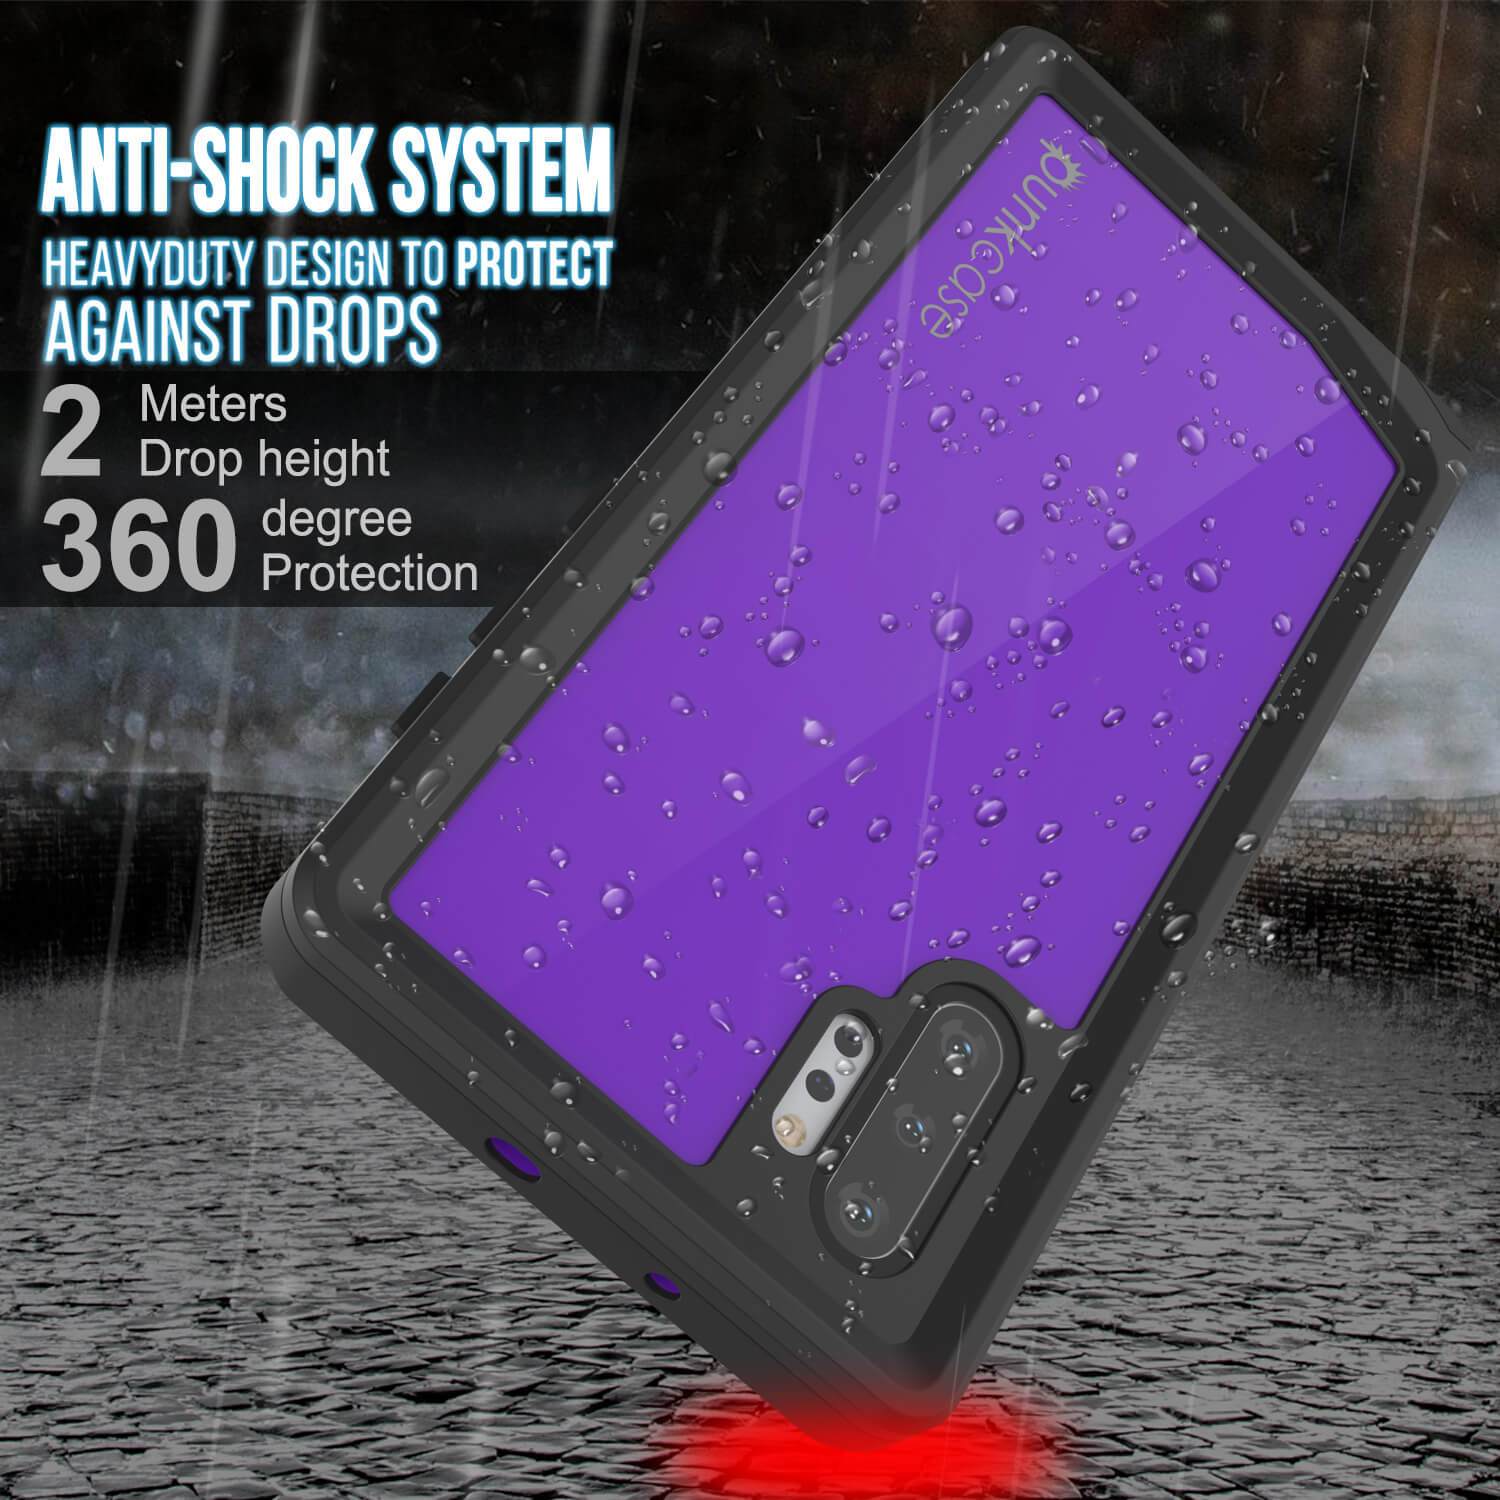 Galaxy Note 10+ Plus Waterproof Case, Punkcase Studstar Purple Series Thin Armor Cover